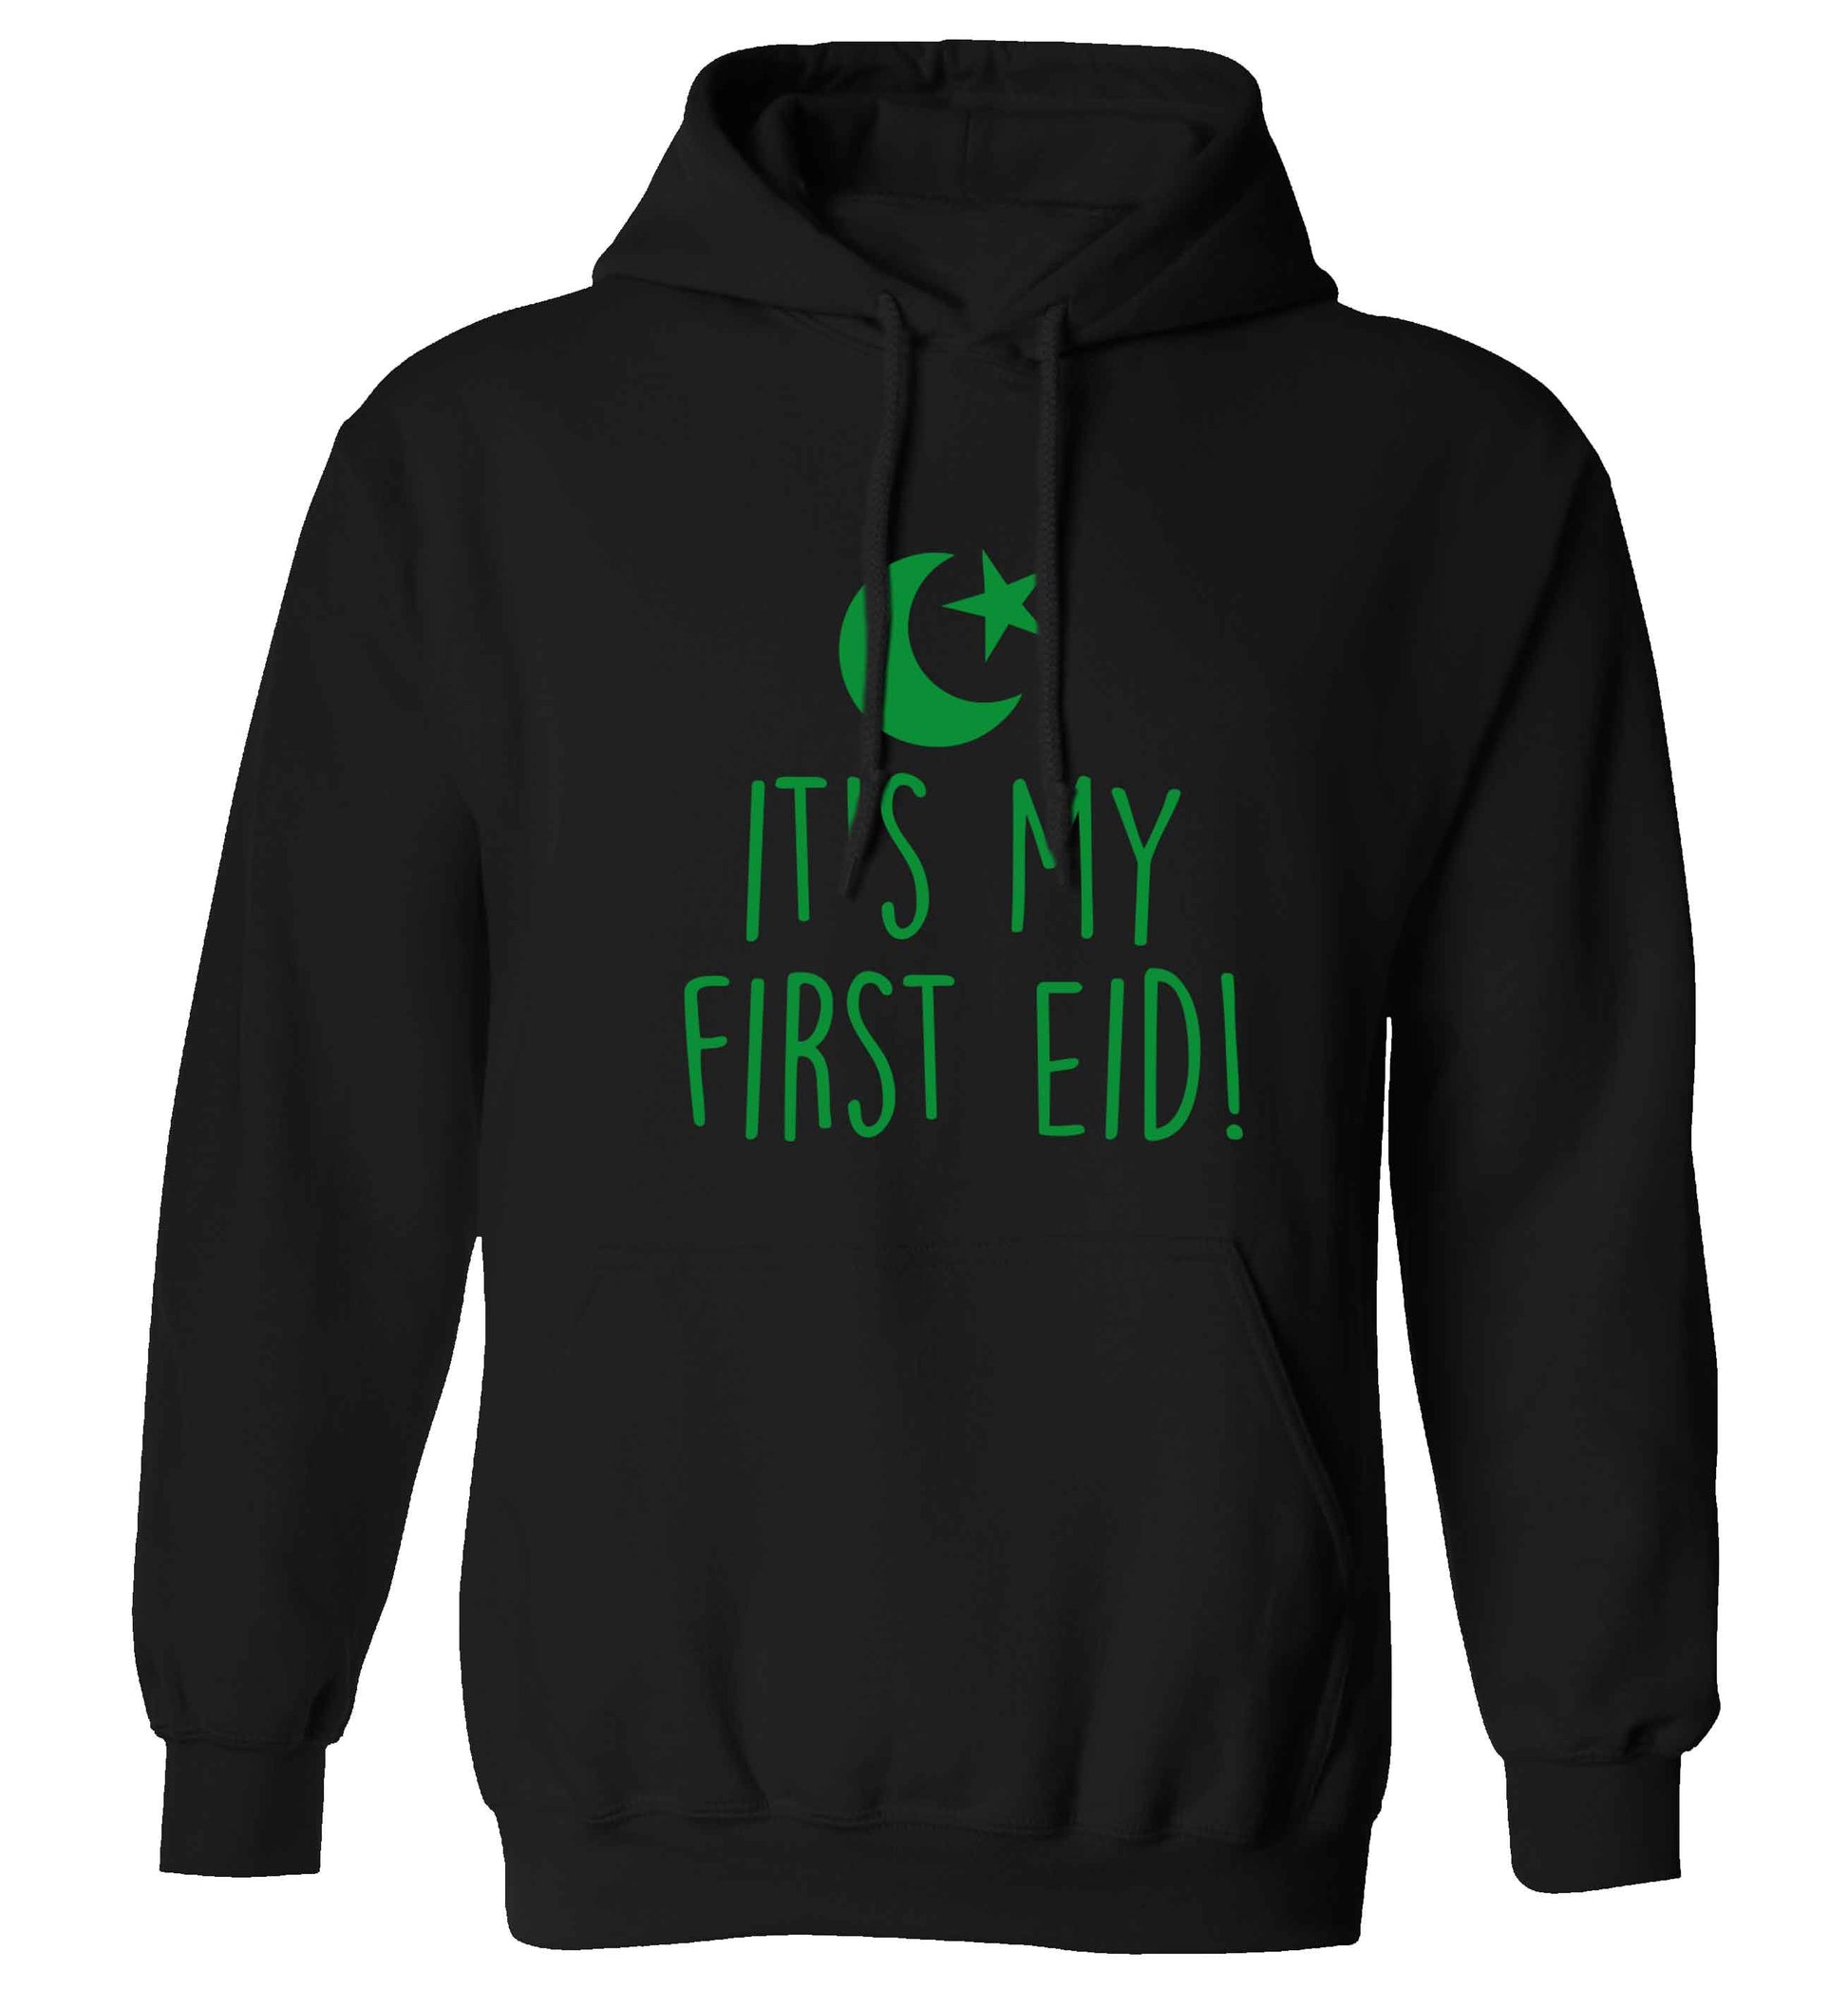 It's my first Eid adults unisex black hoodie 2XL